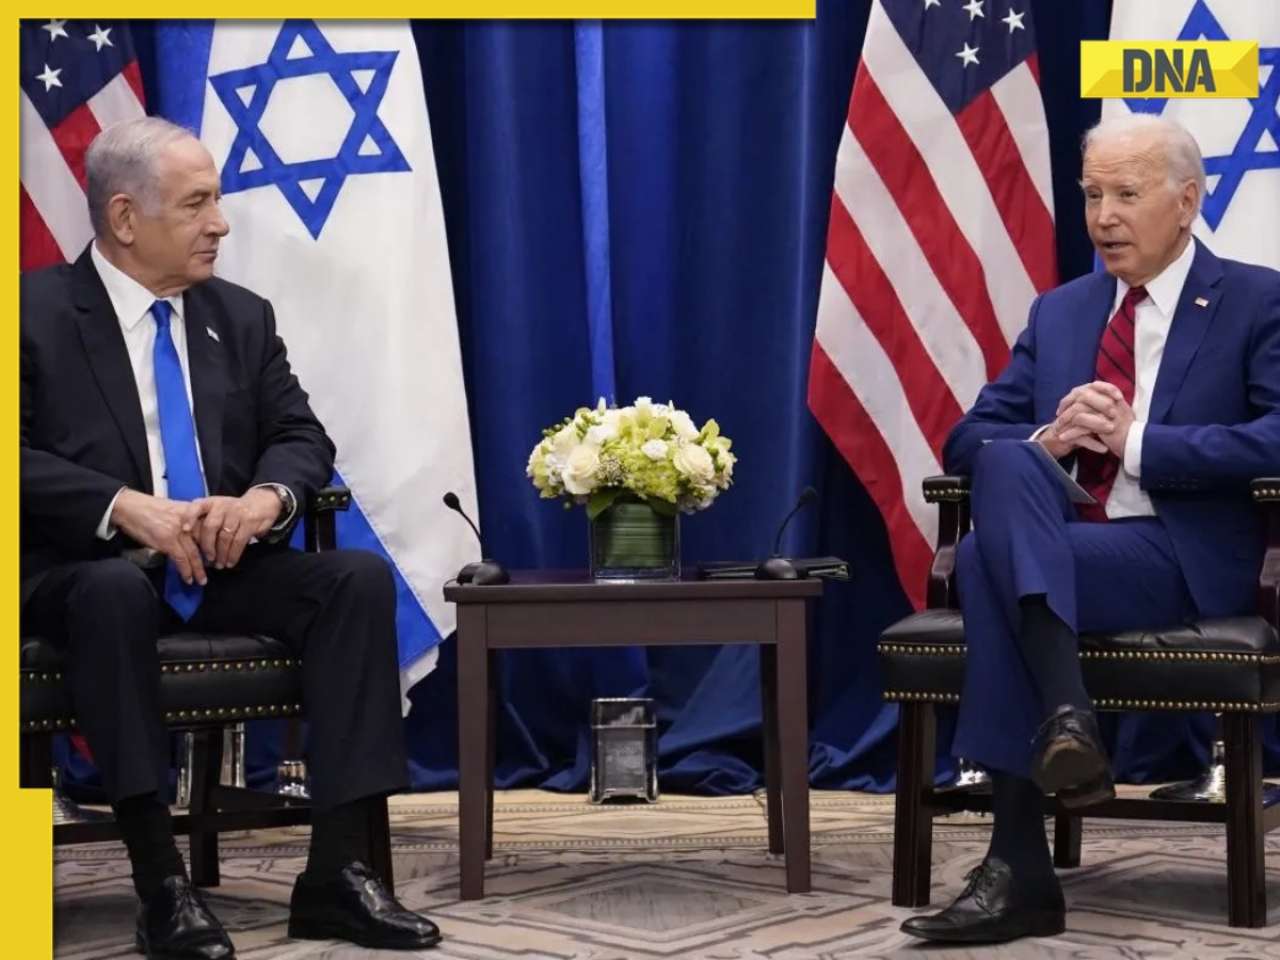 'Deeply concerned about Israeli operation in Rafah': US President Joe Biden tells Israeli PM Netanyahu